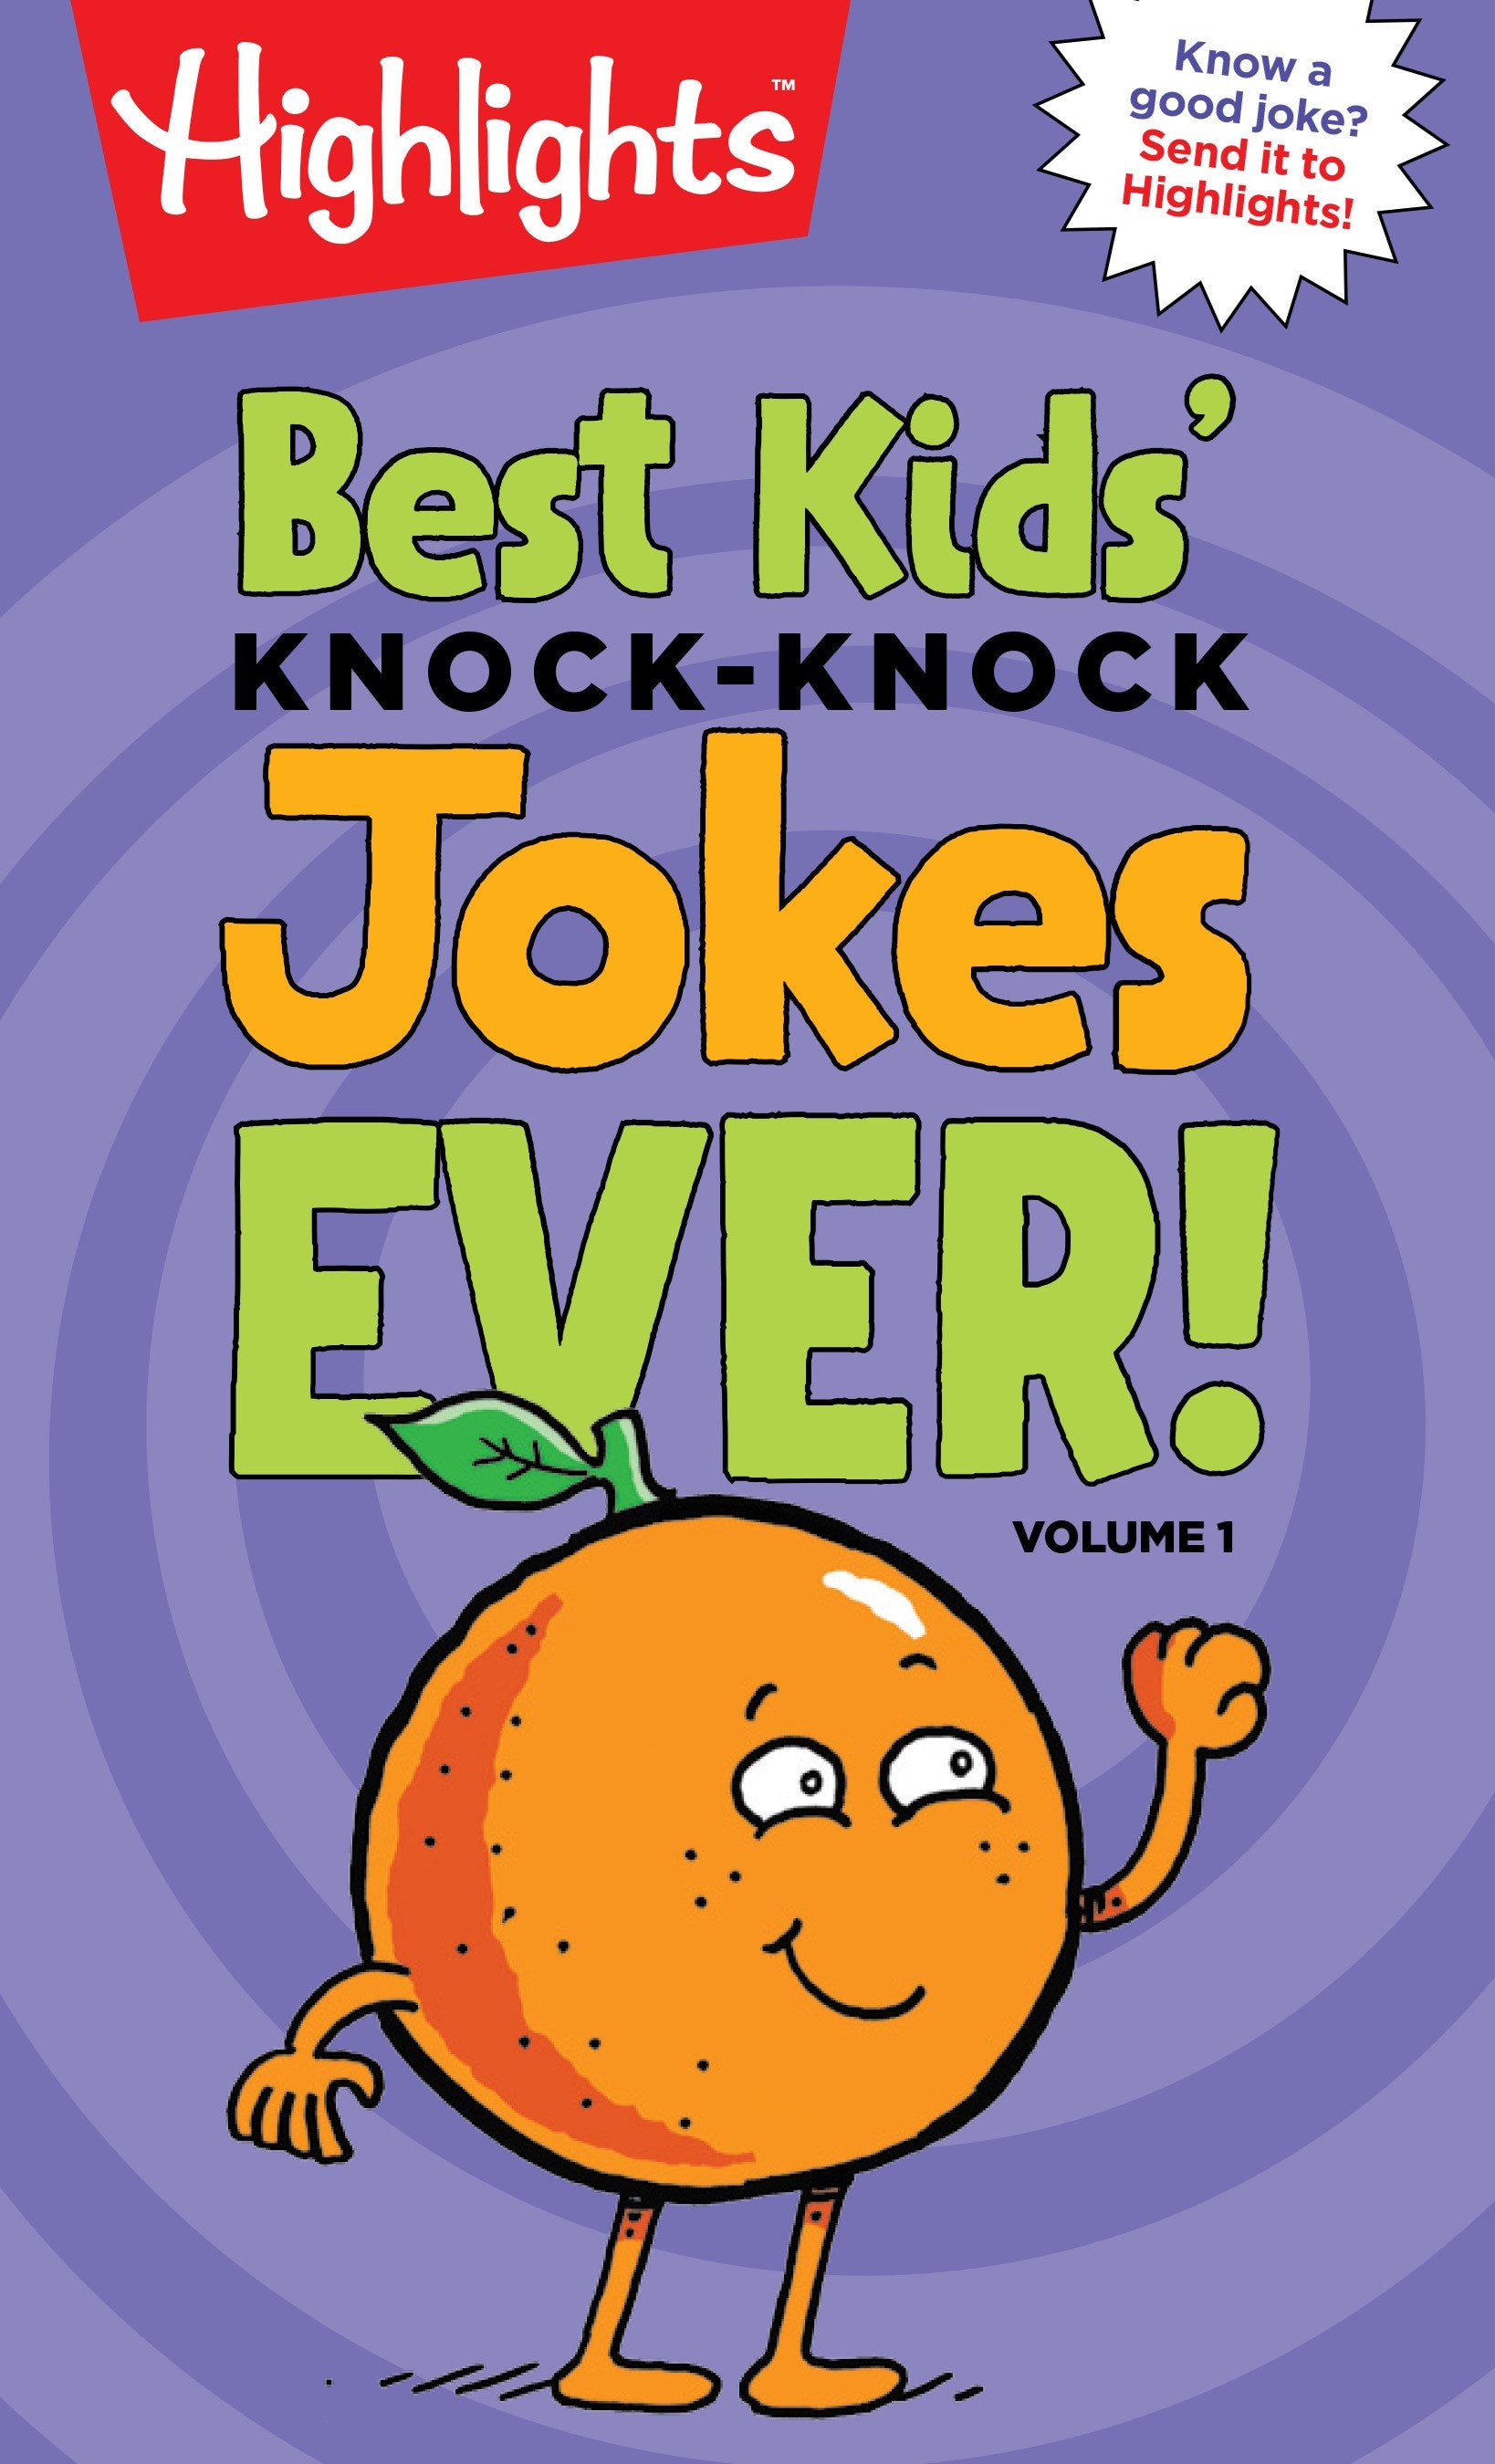 Best Kids' Knock-Knock Jokes Ever! Volume 1: Volume 1